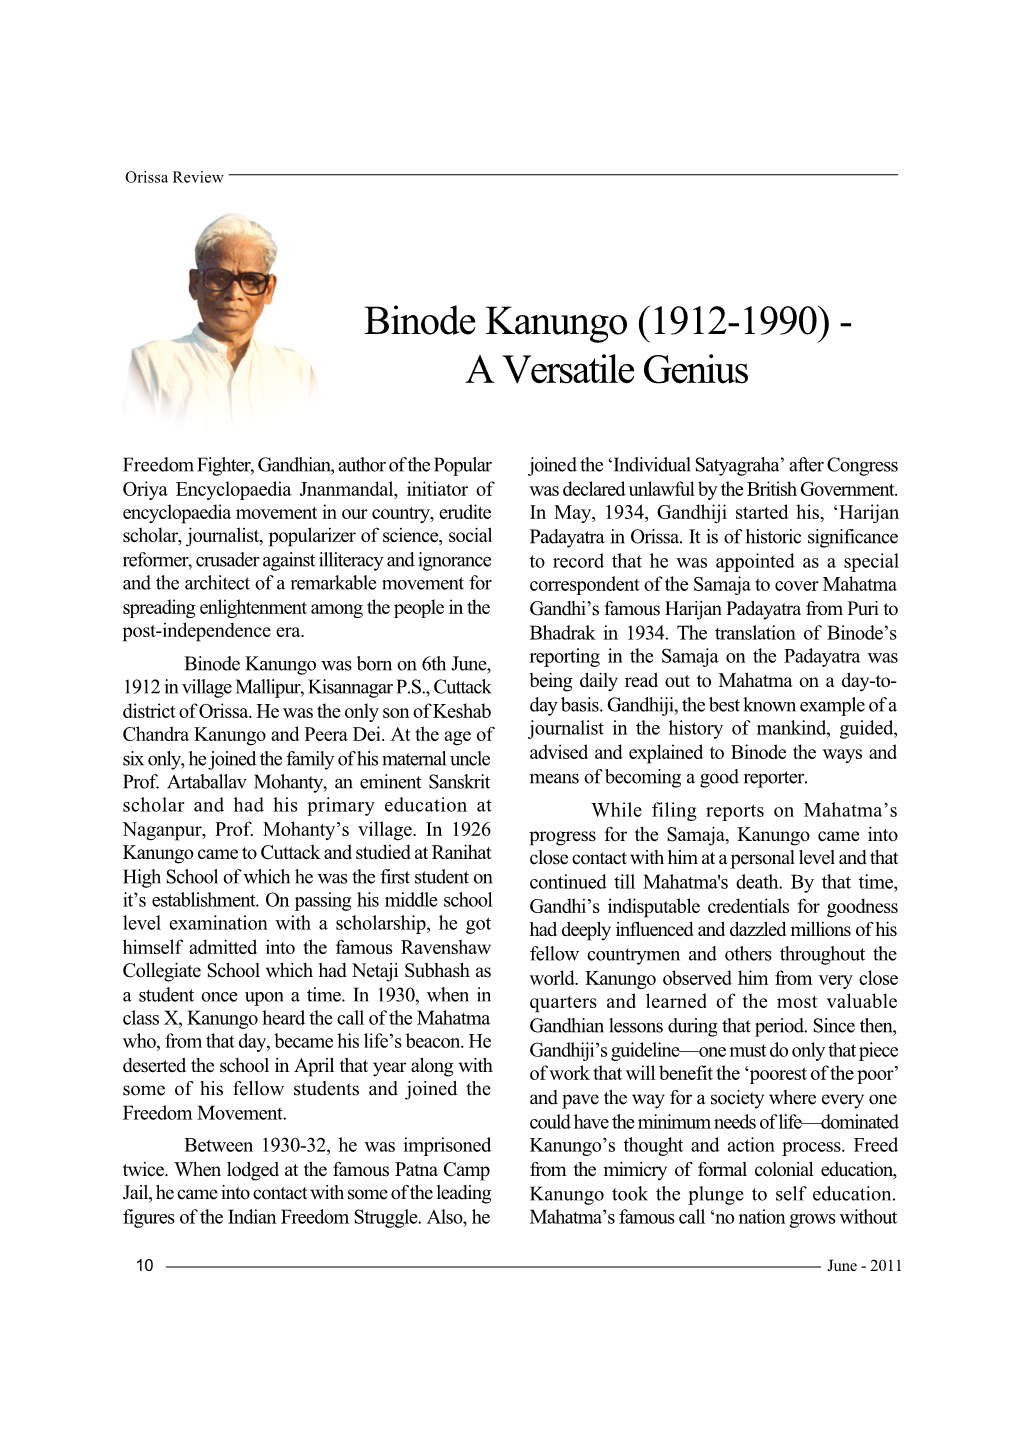 Binode Kanungo (1912-1990) - a Versatile Genius